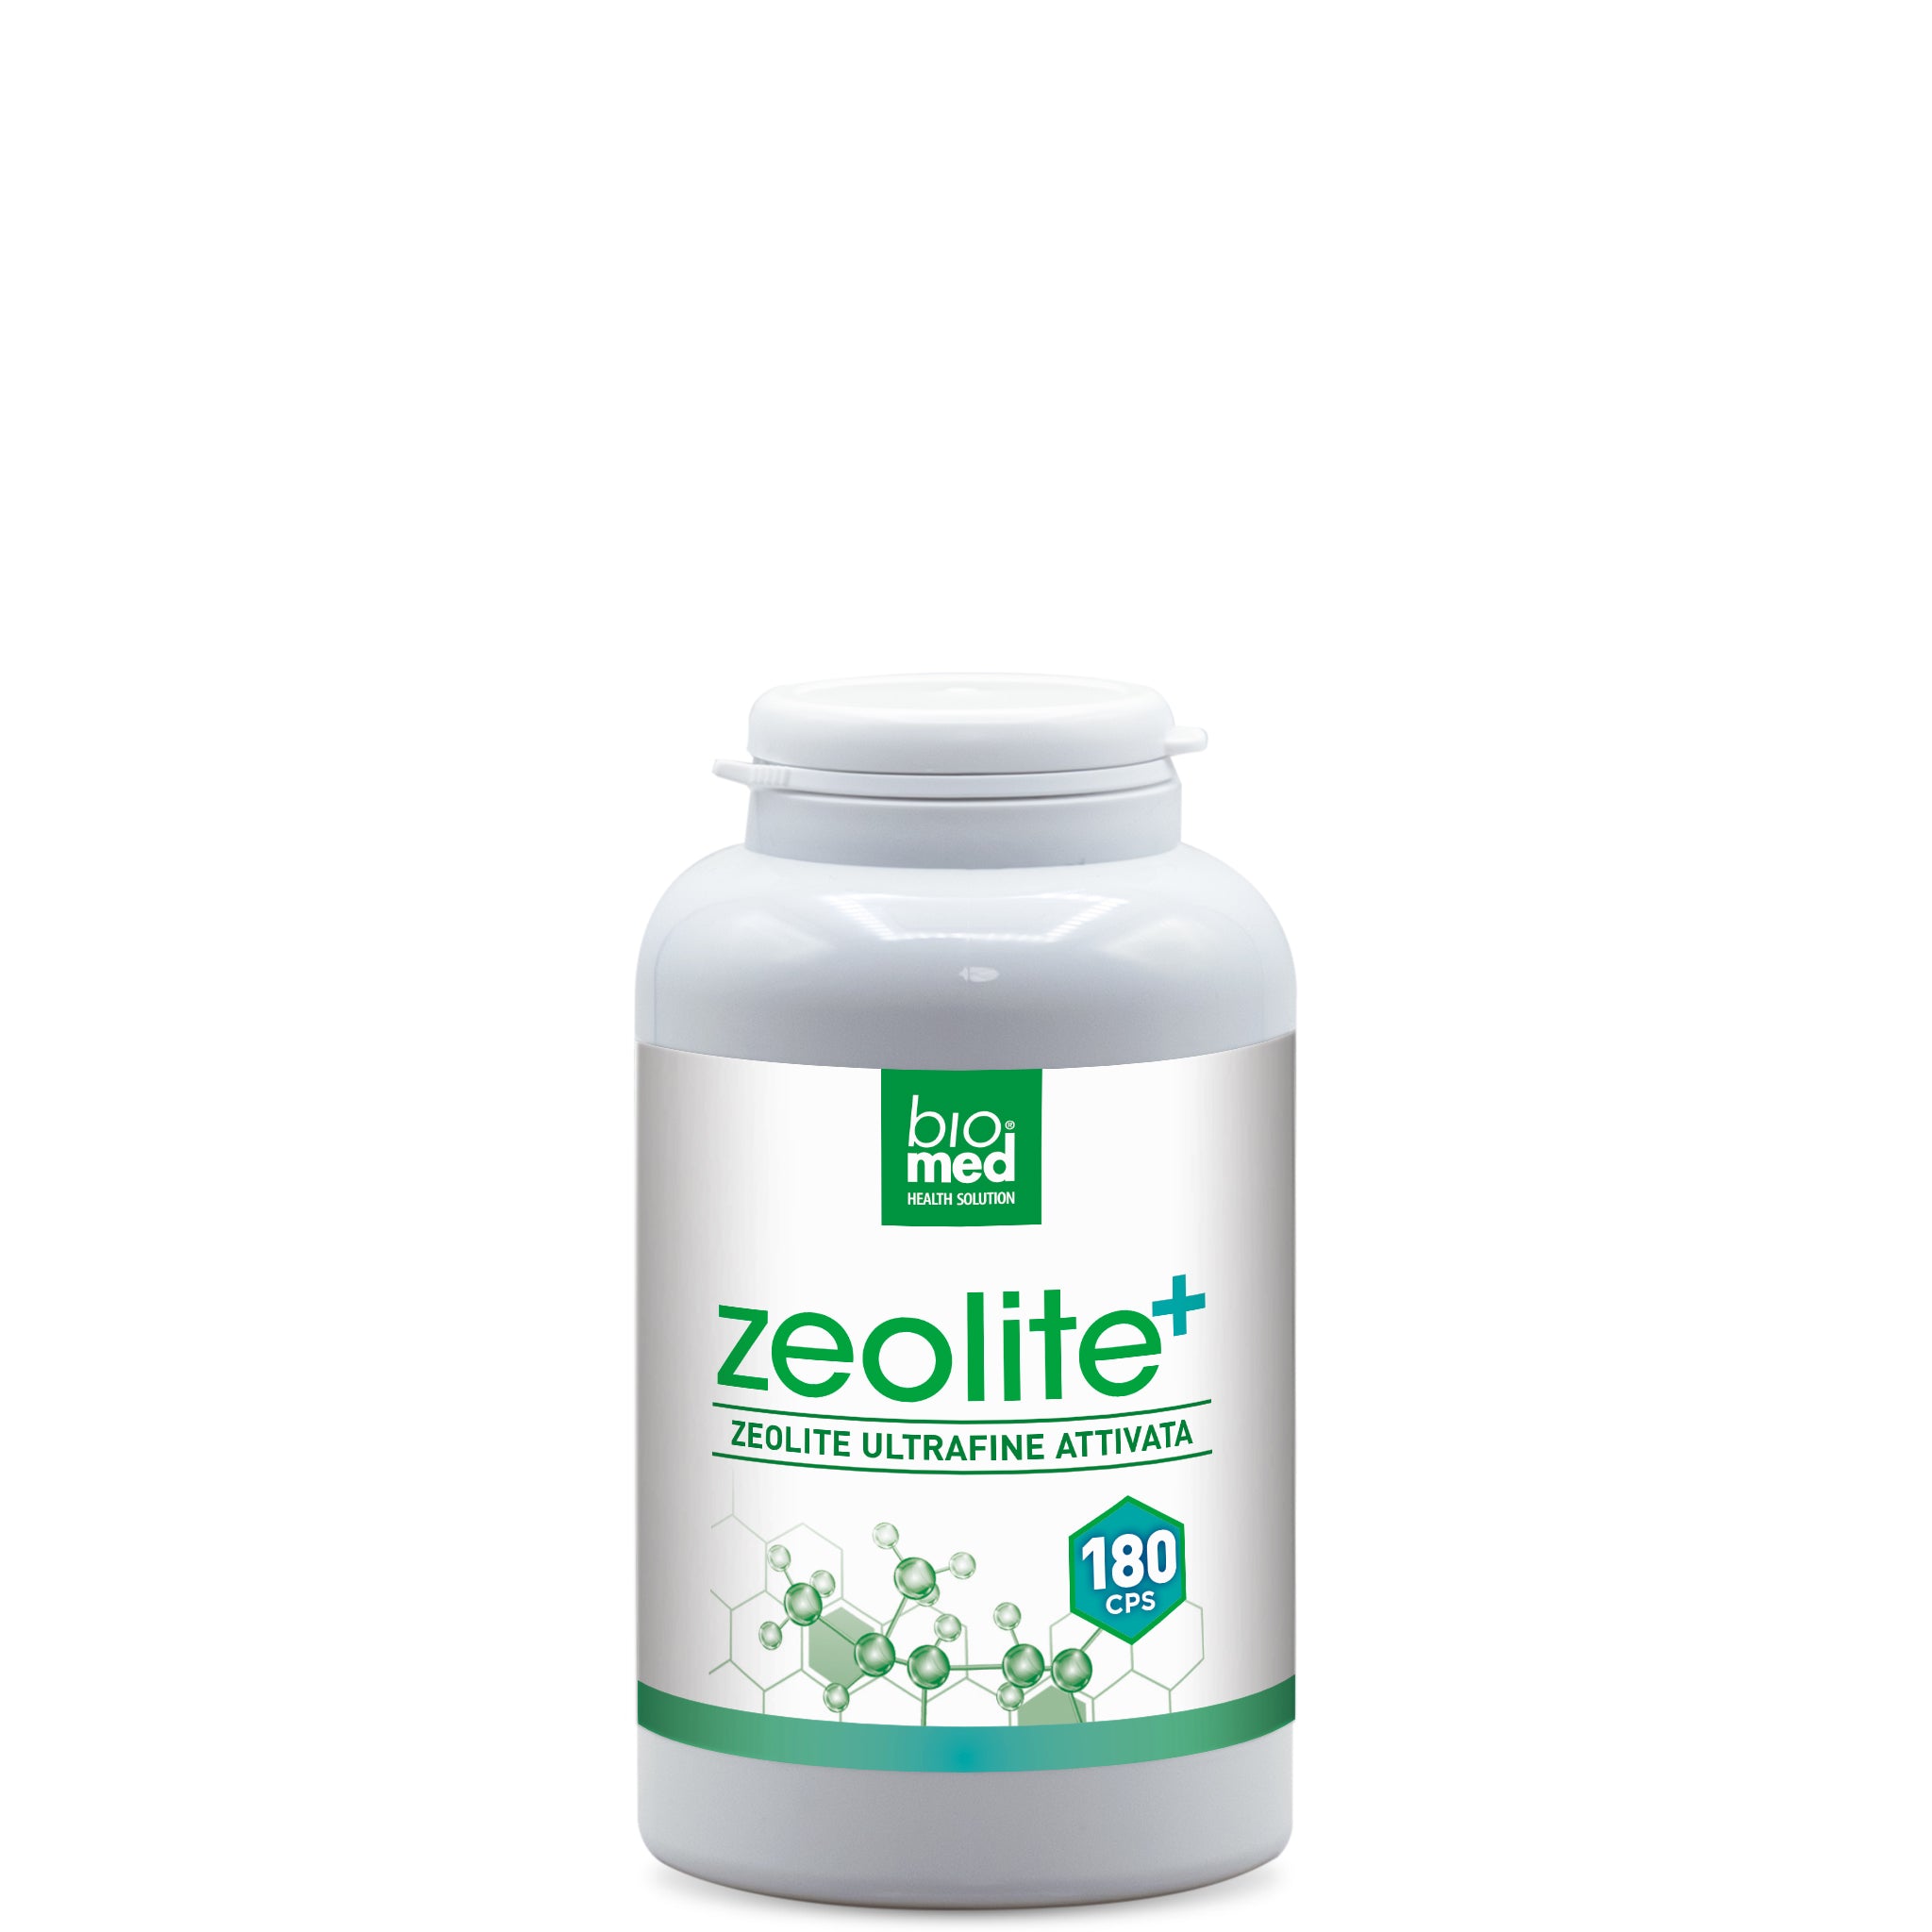 zeolite+ ultrafina attivata - biomed - 180 capsule